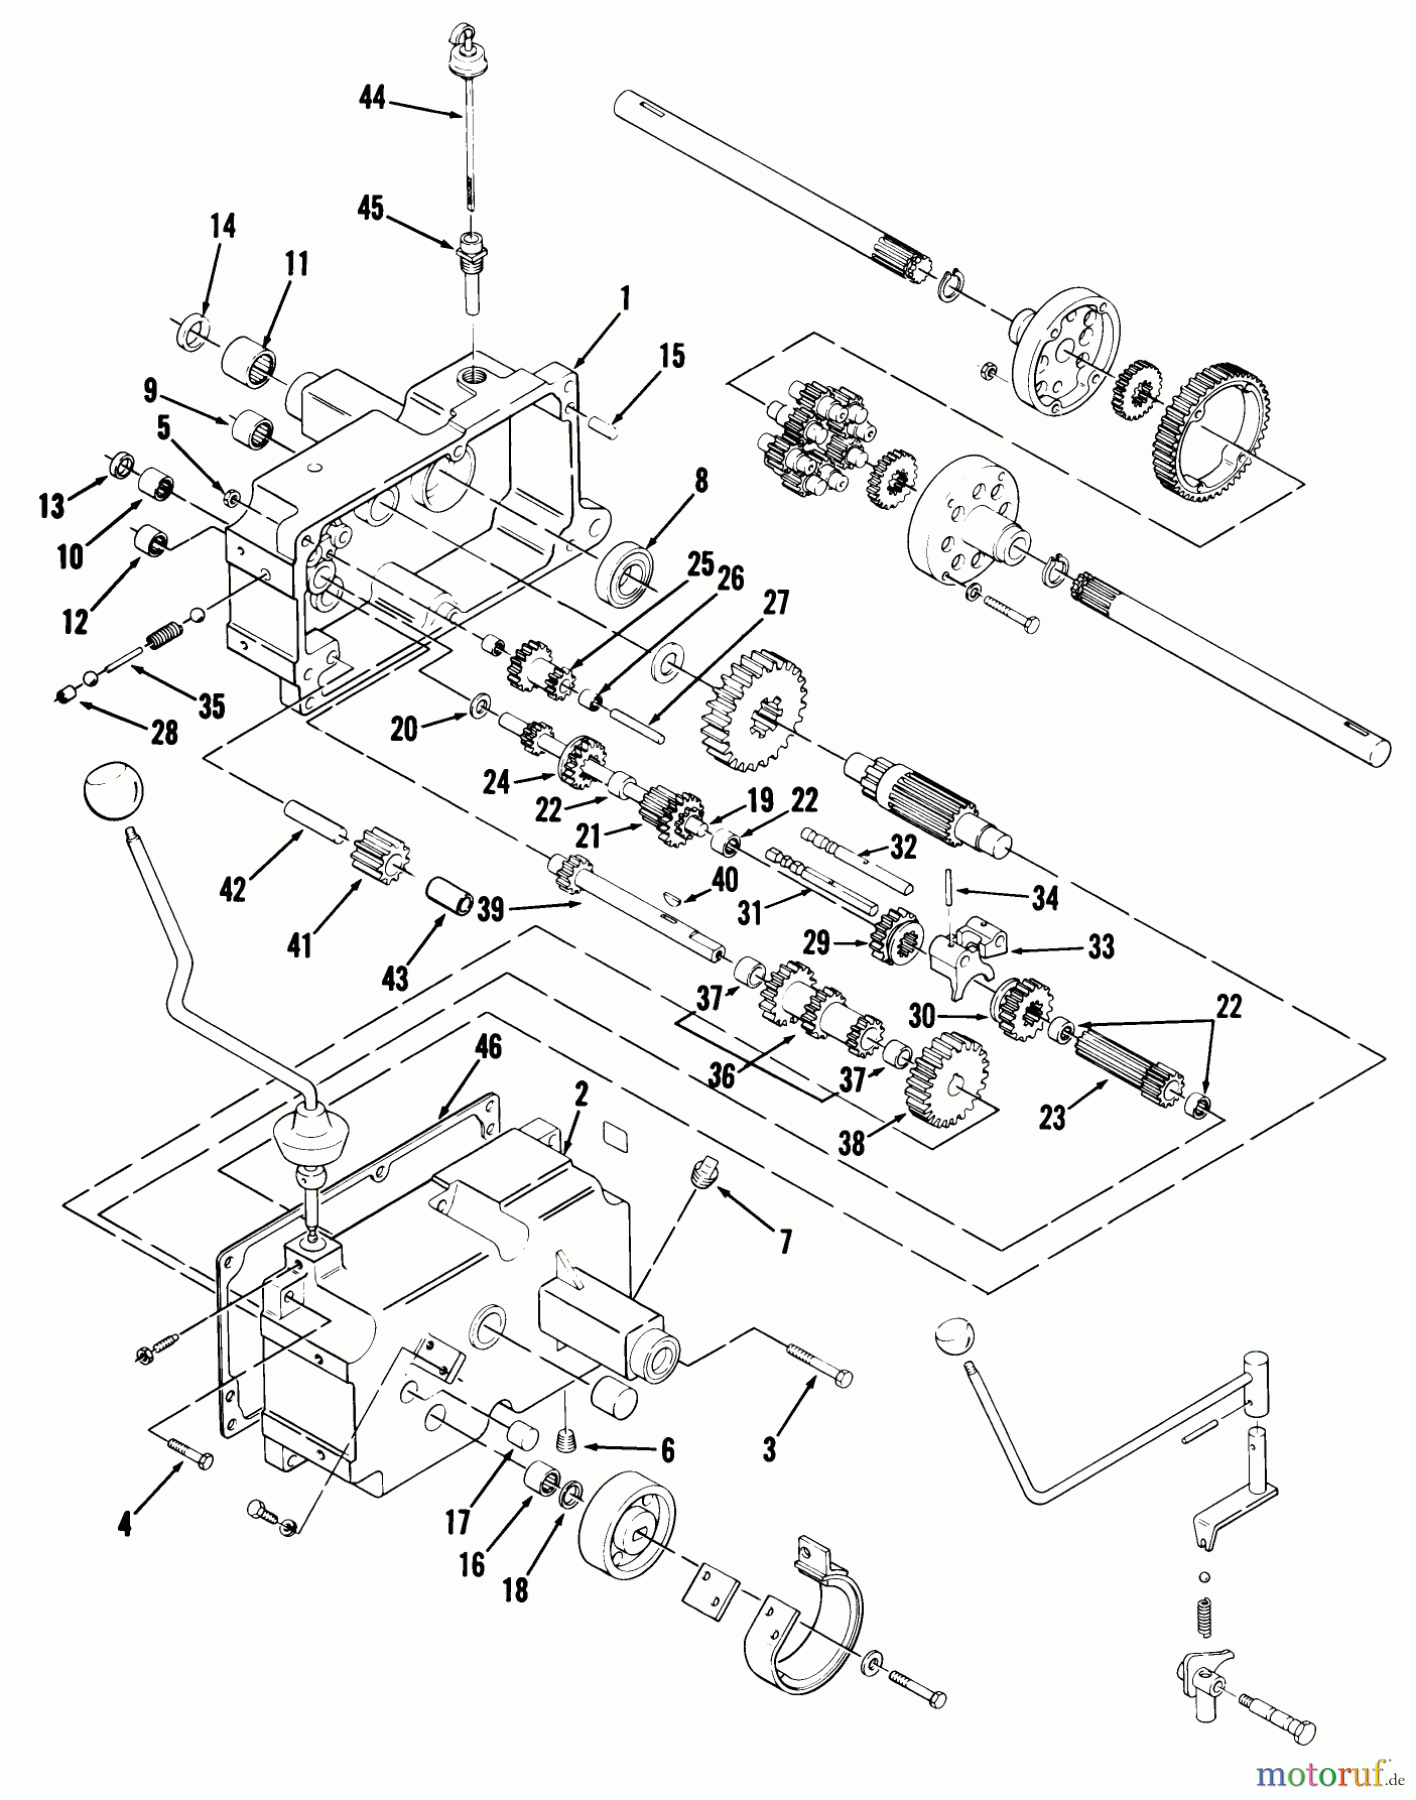  Toro Neu Mowers, Lawn & Garden Tractor Seite 1 01-12KE01 (C-125) - Toro C-125 Automatic Tractor, 1980 MECHANICAL TRANSMISSION-8 SPEED #1